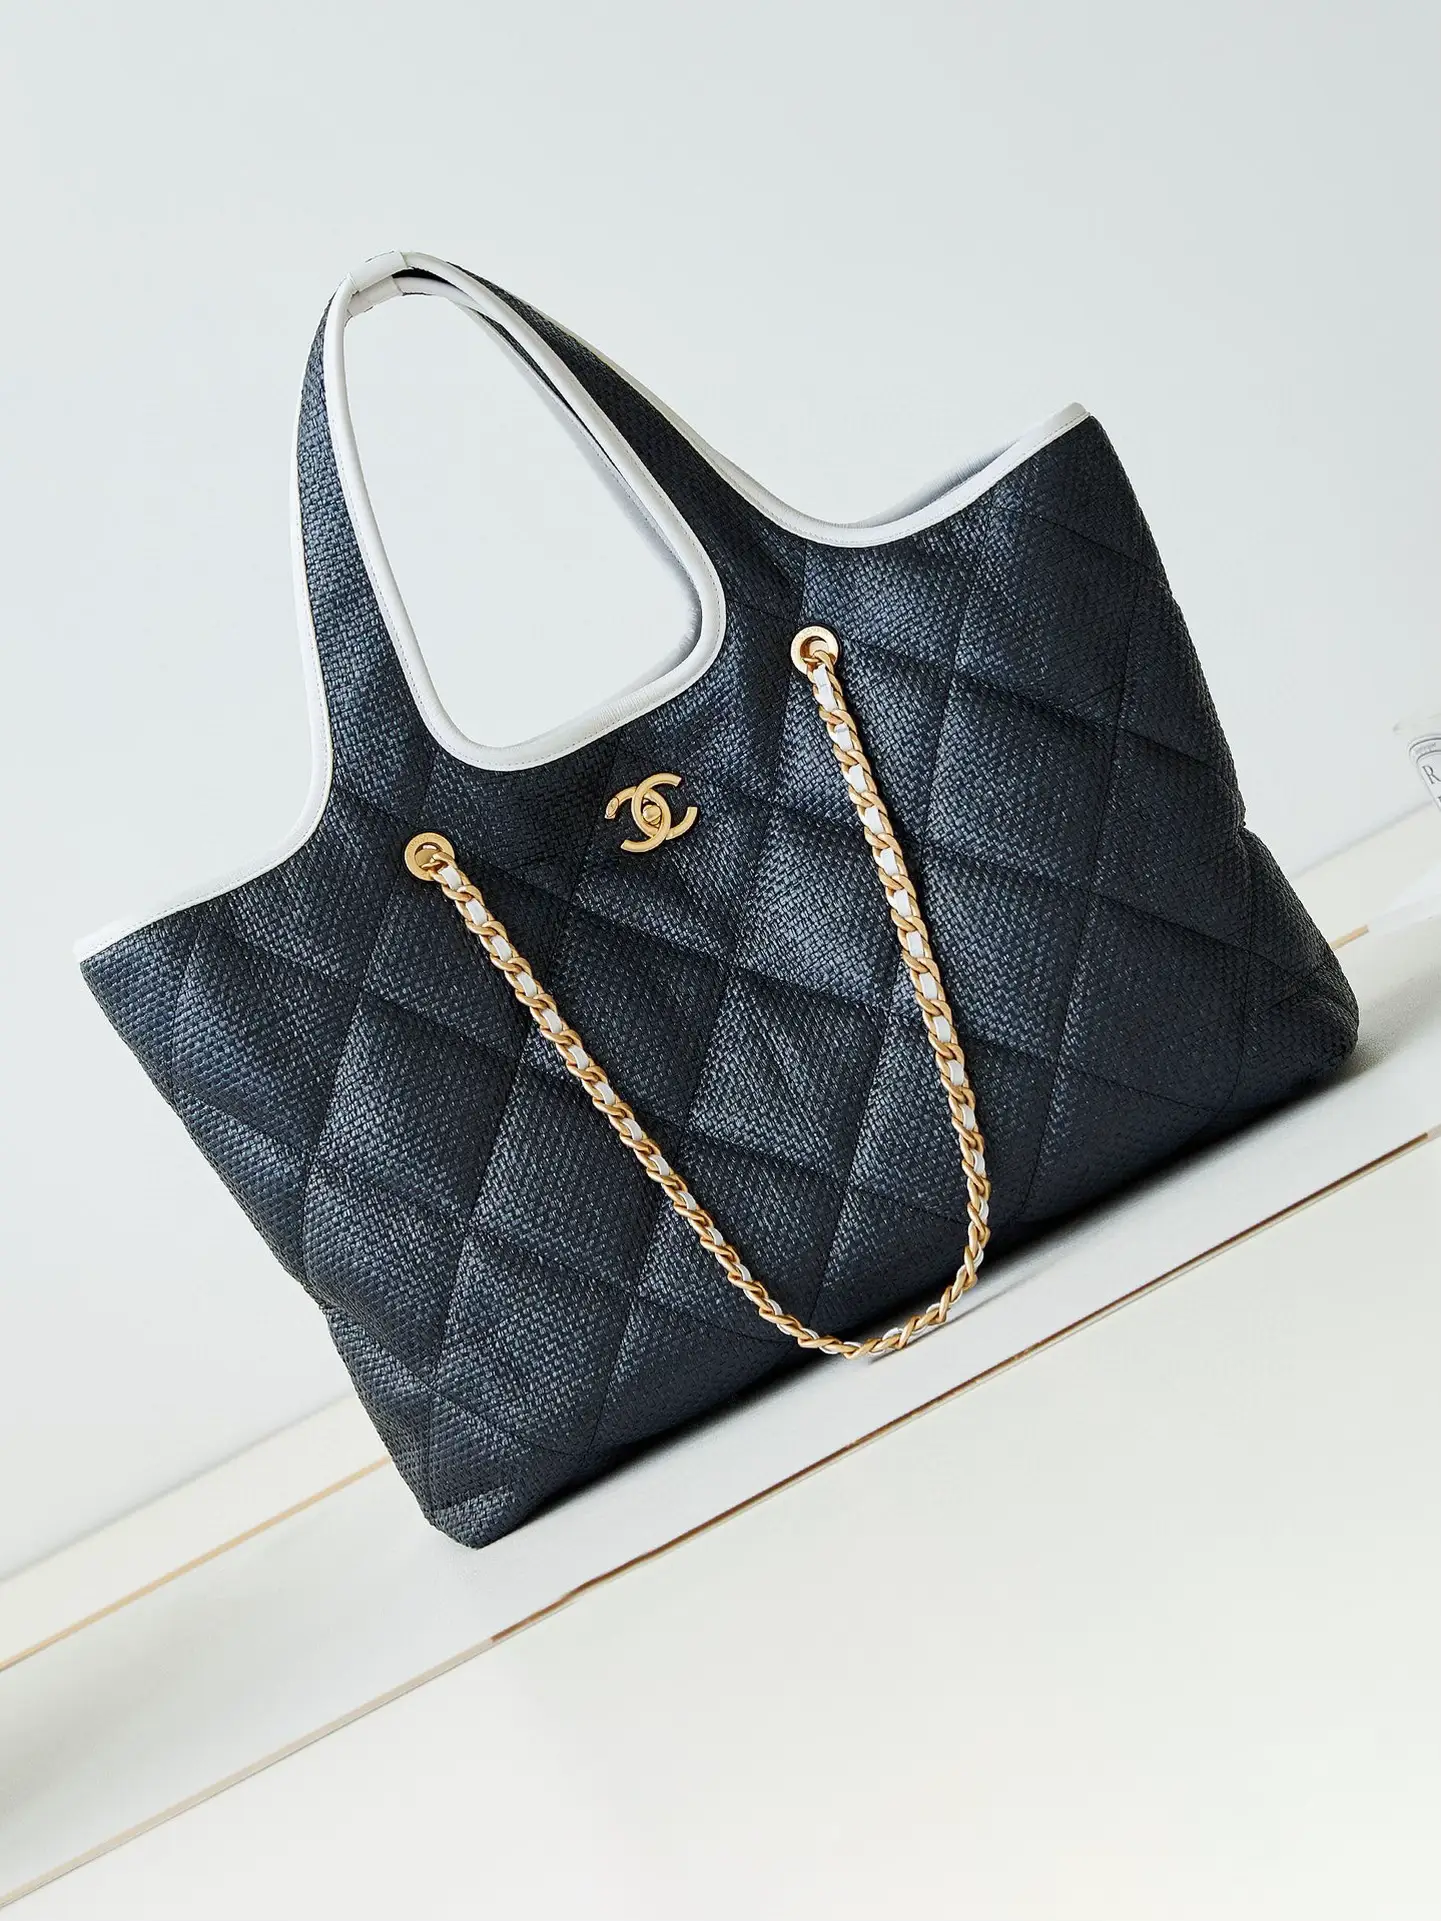 Chanel 23A coco beach handbag | Luxe Fashionが投稿したフォトブック